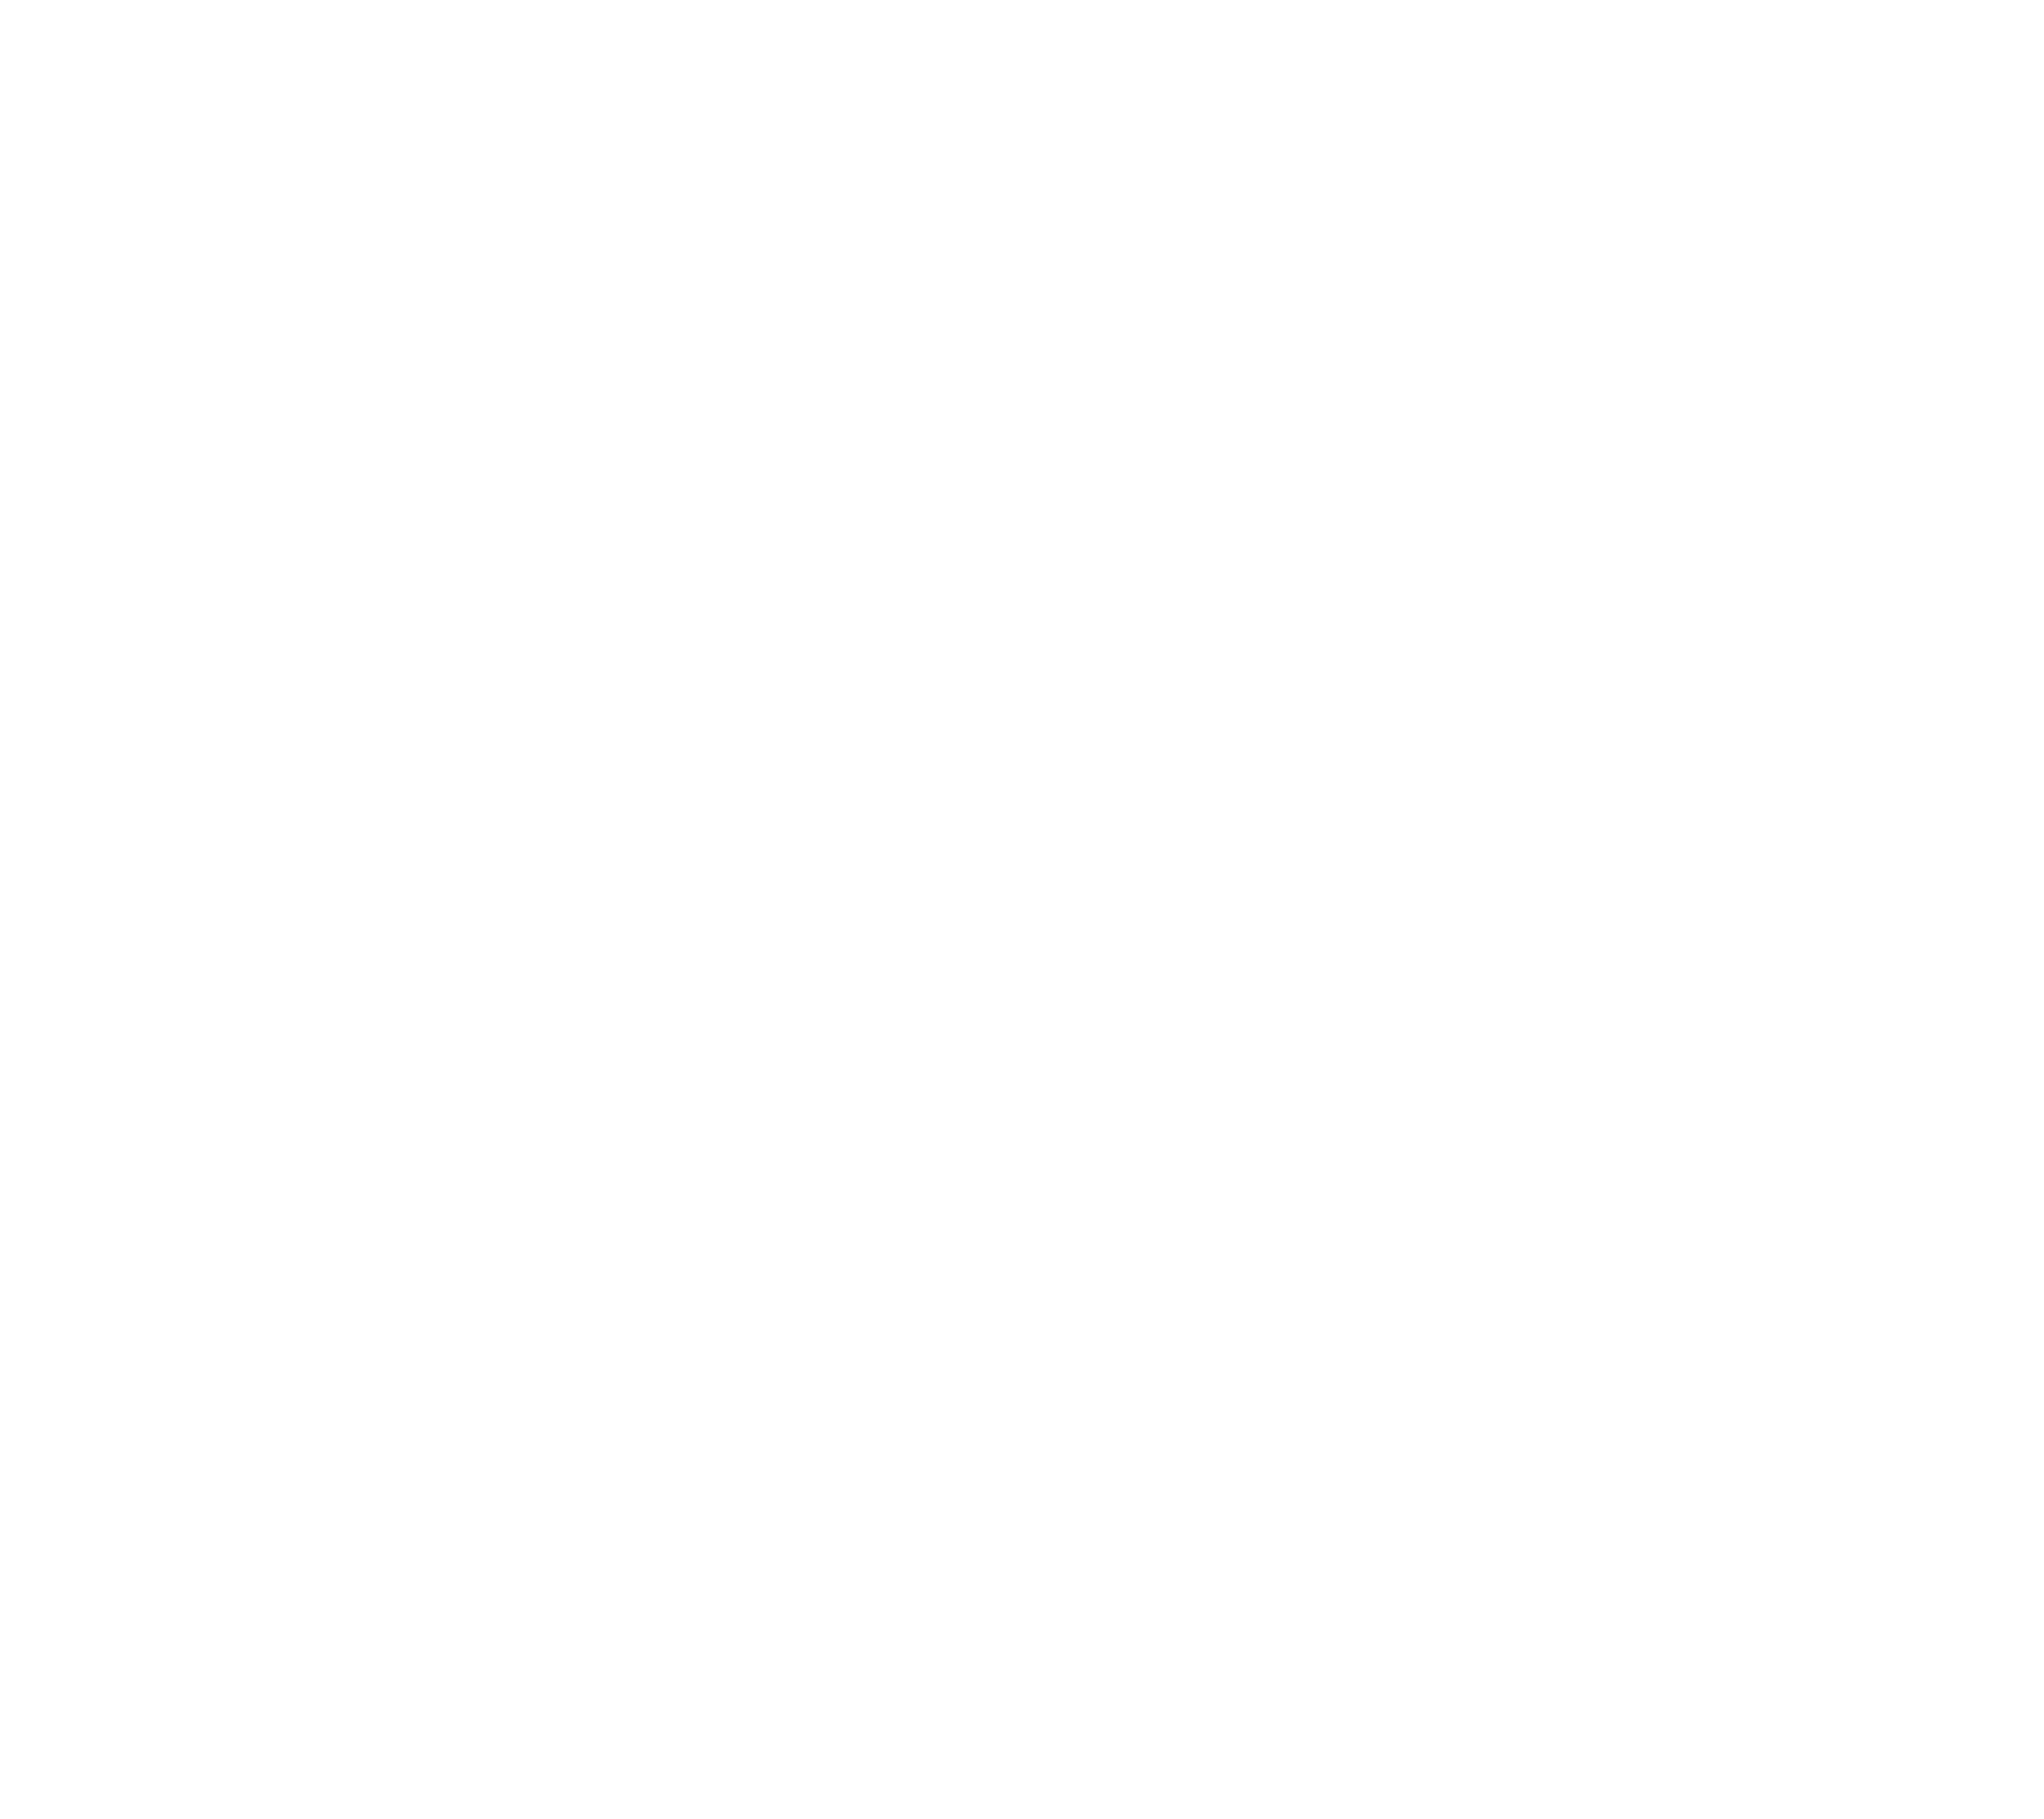 VAI logo